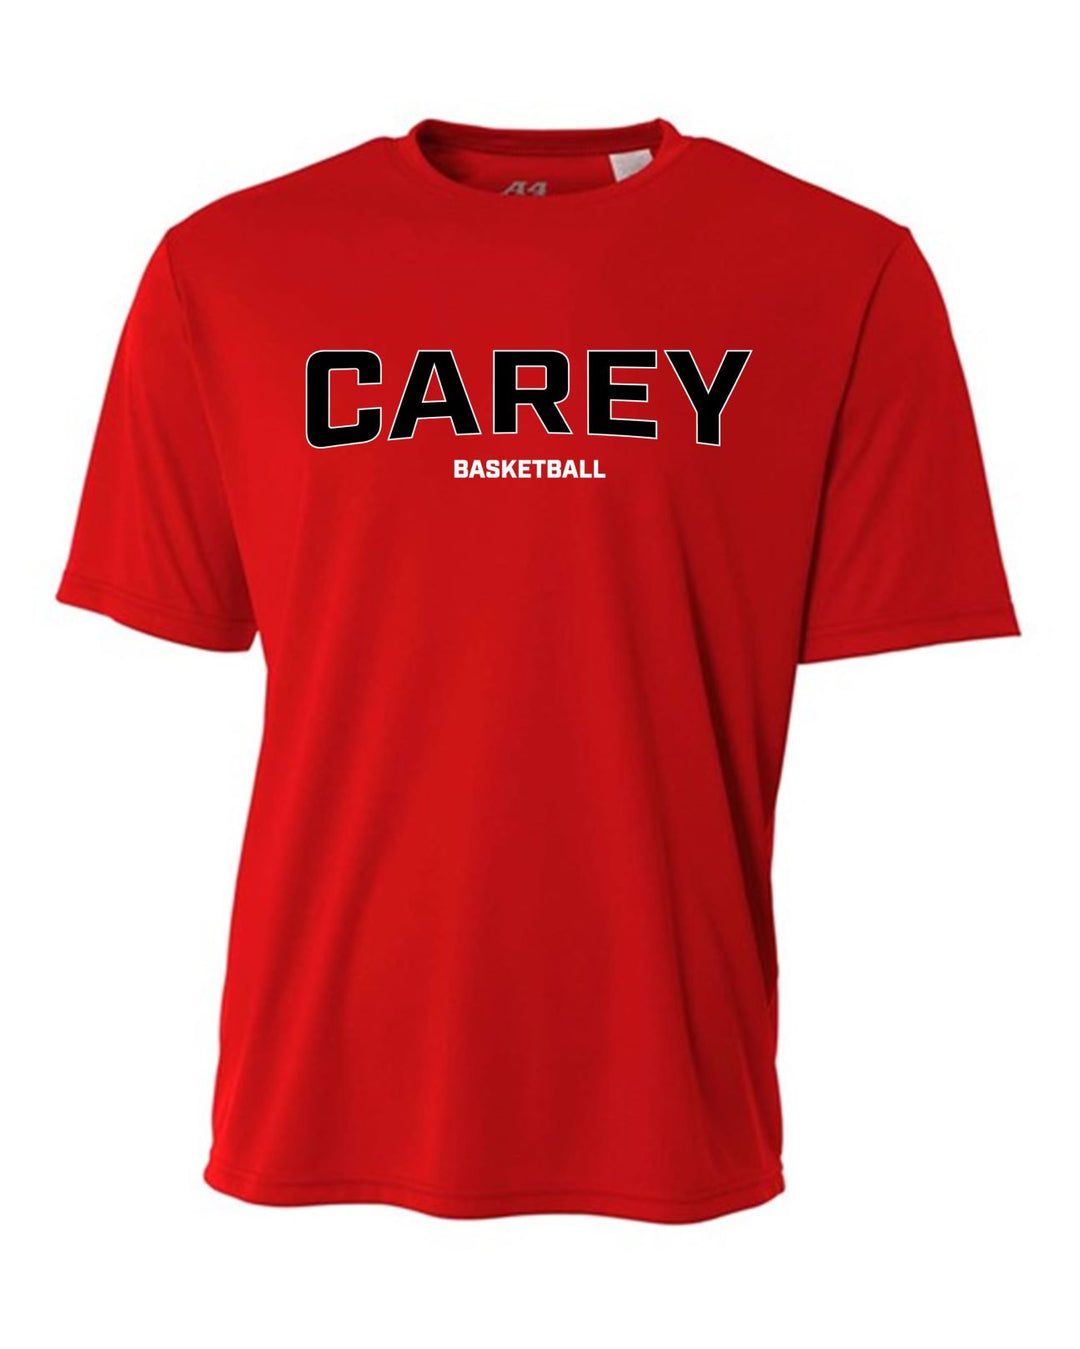 WCU Basketball Men's Short-Sleeve Performance Shirt WCU Basketball Red CAREY - Third Coast Soccer